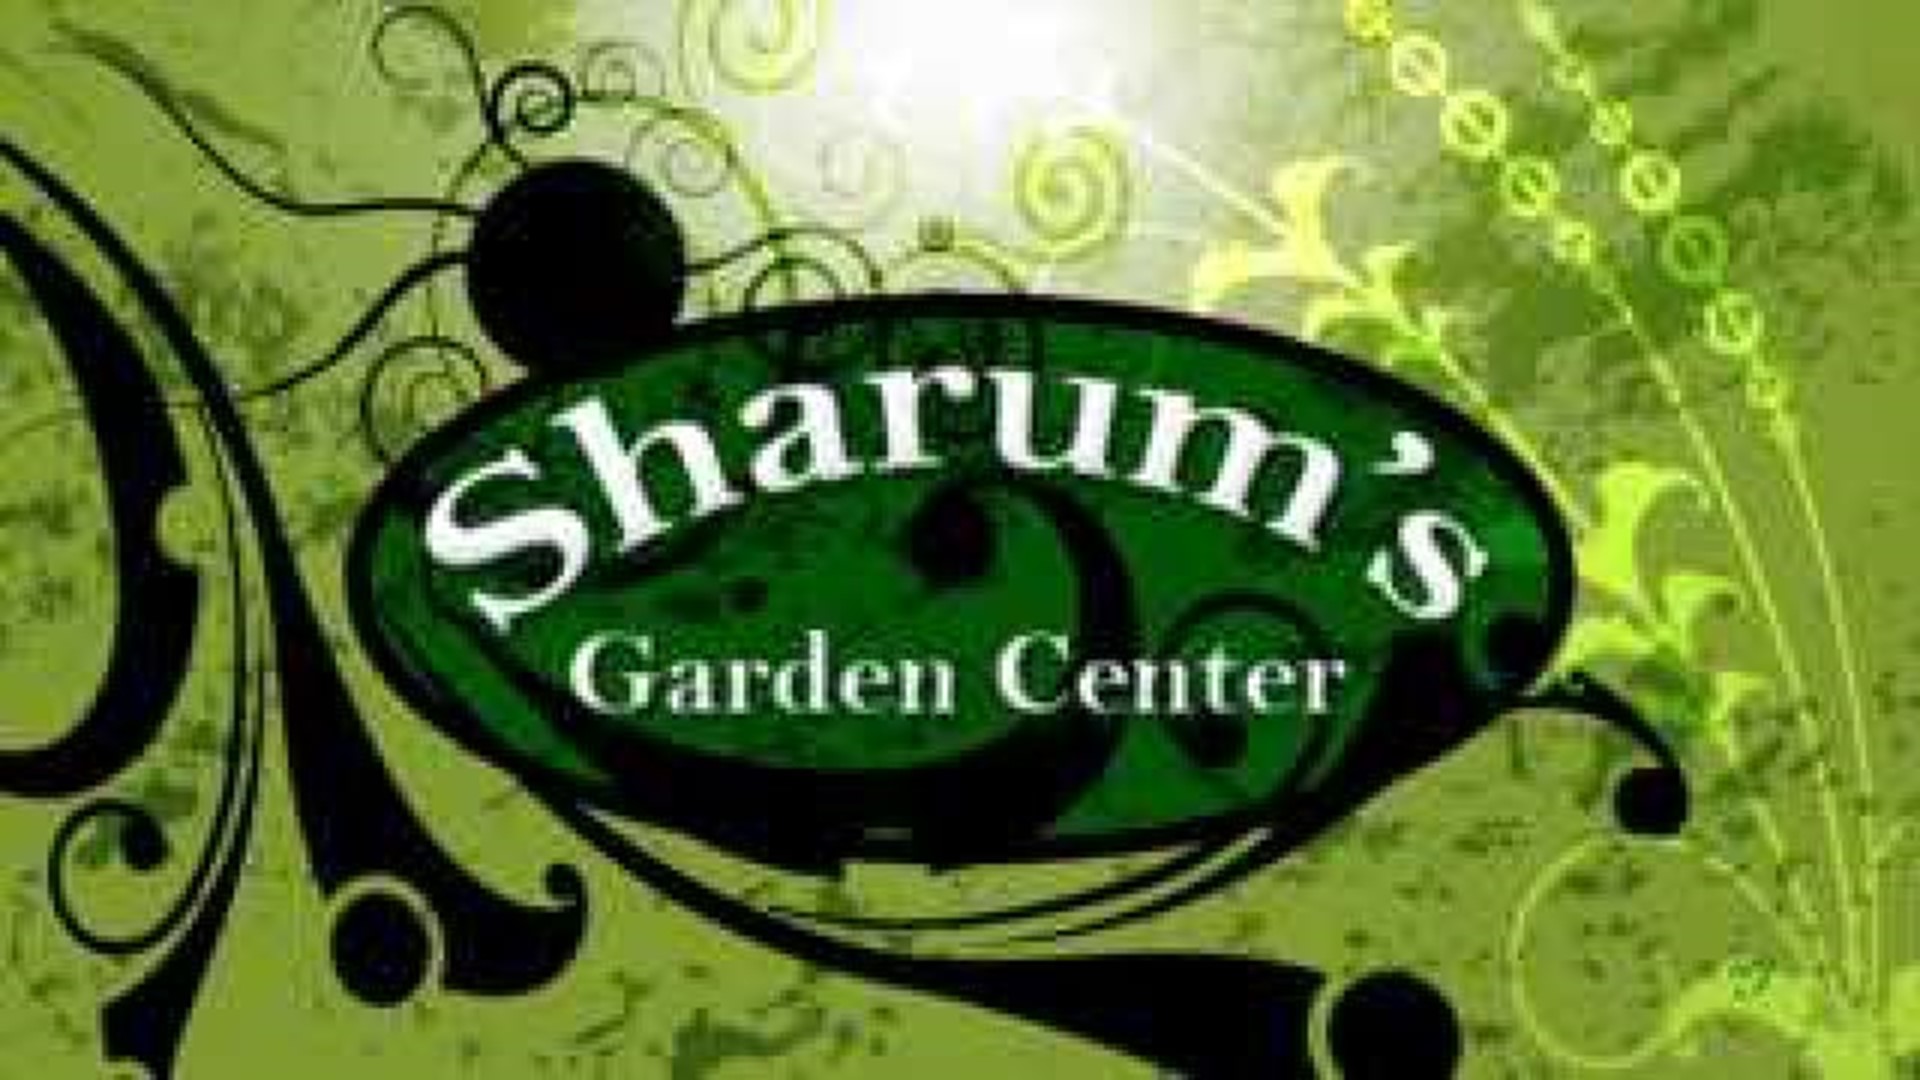 Sharum's Garden Center: History of Sharum's